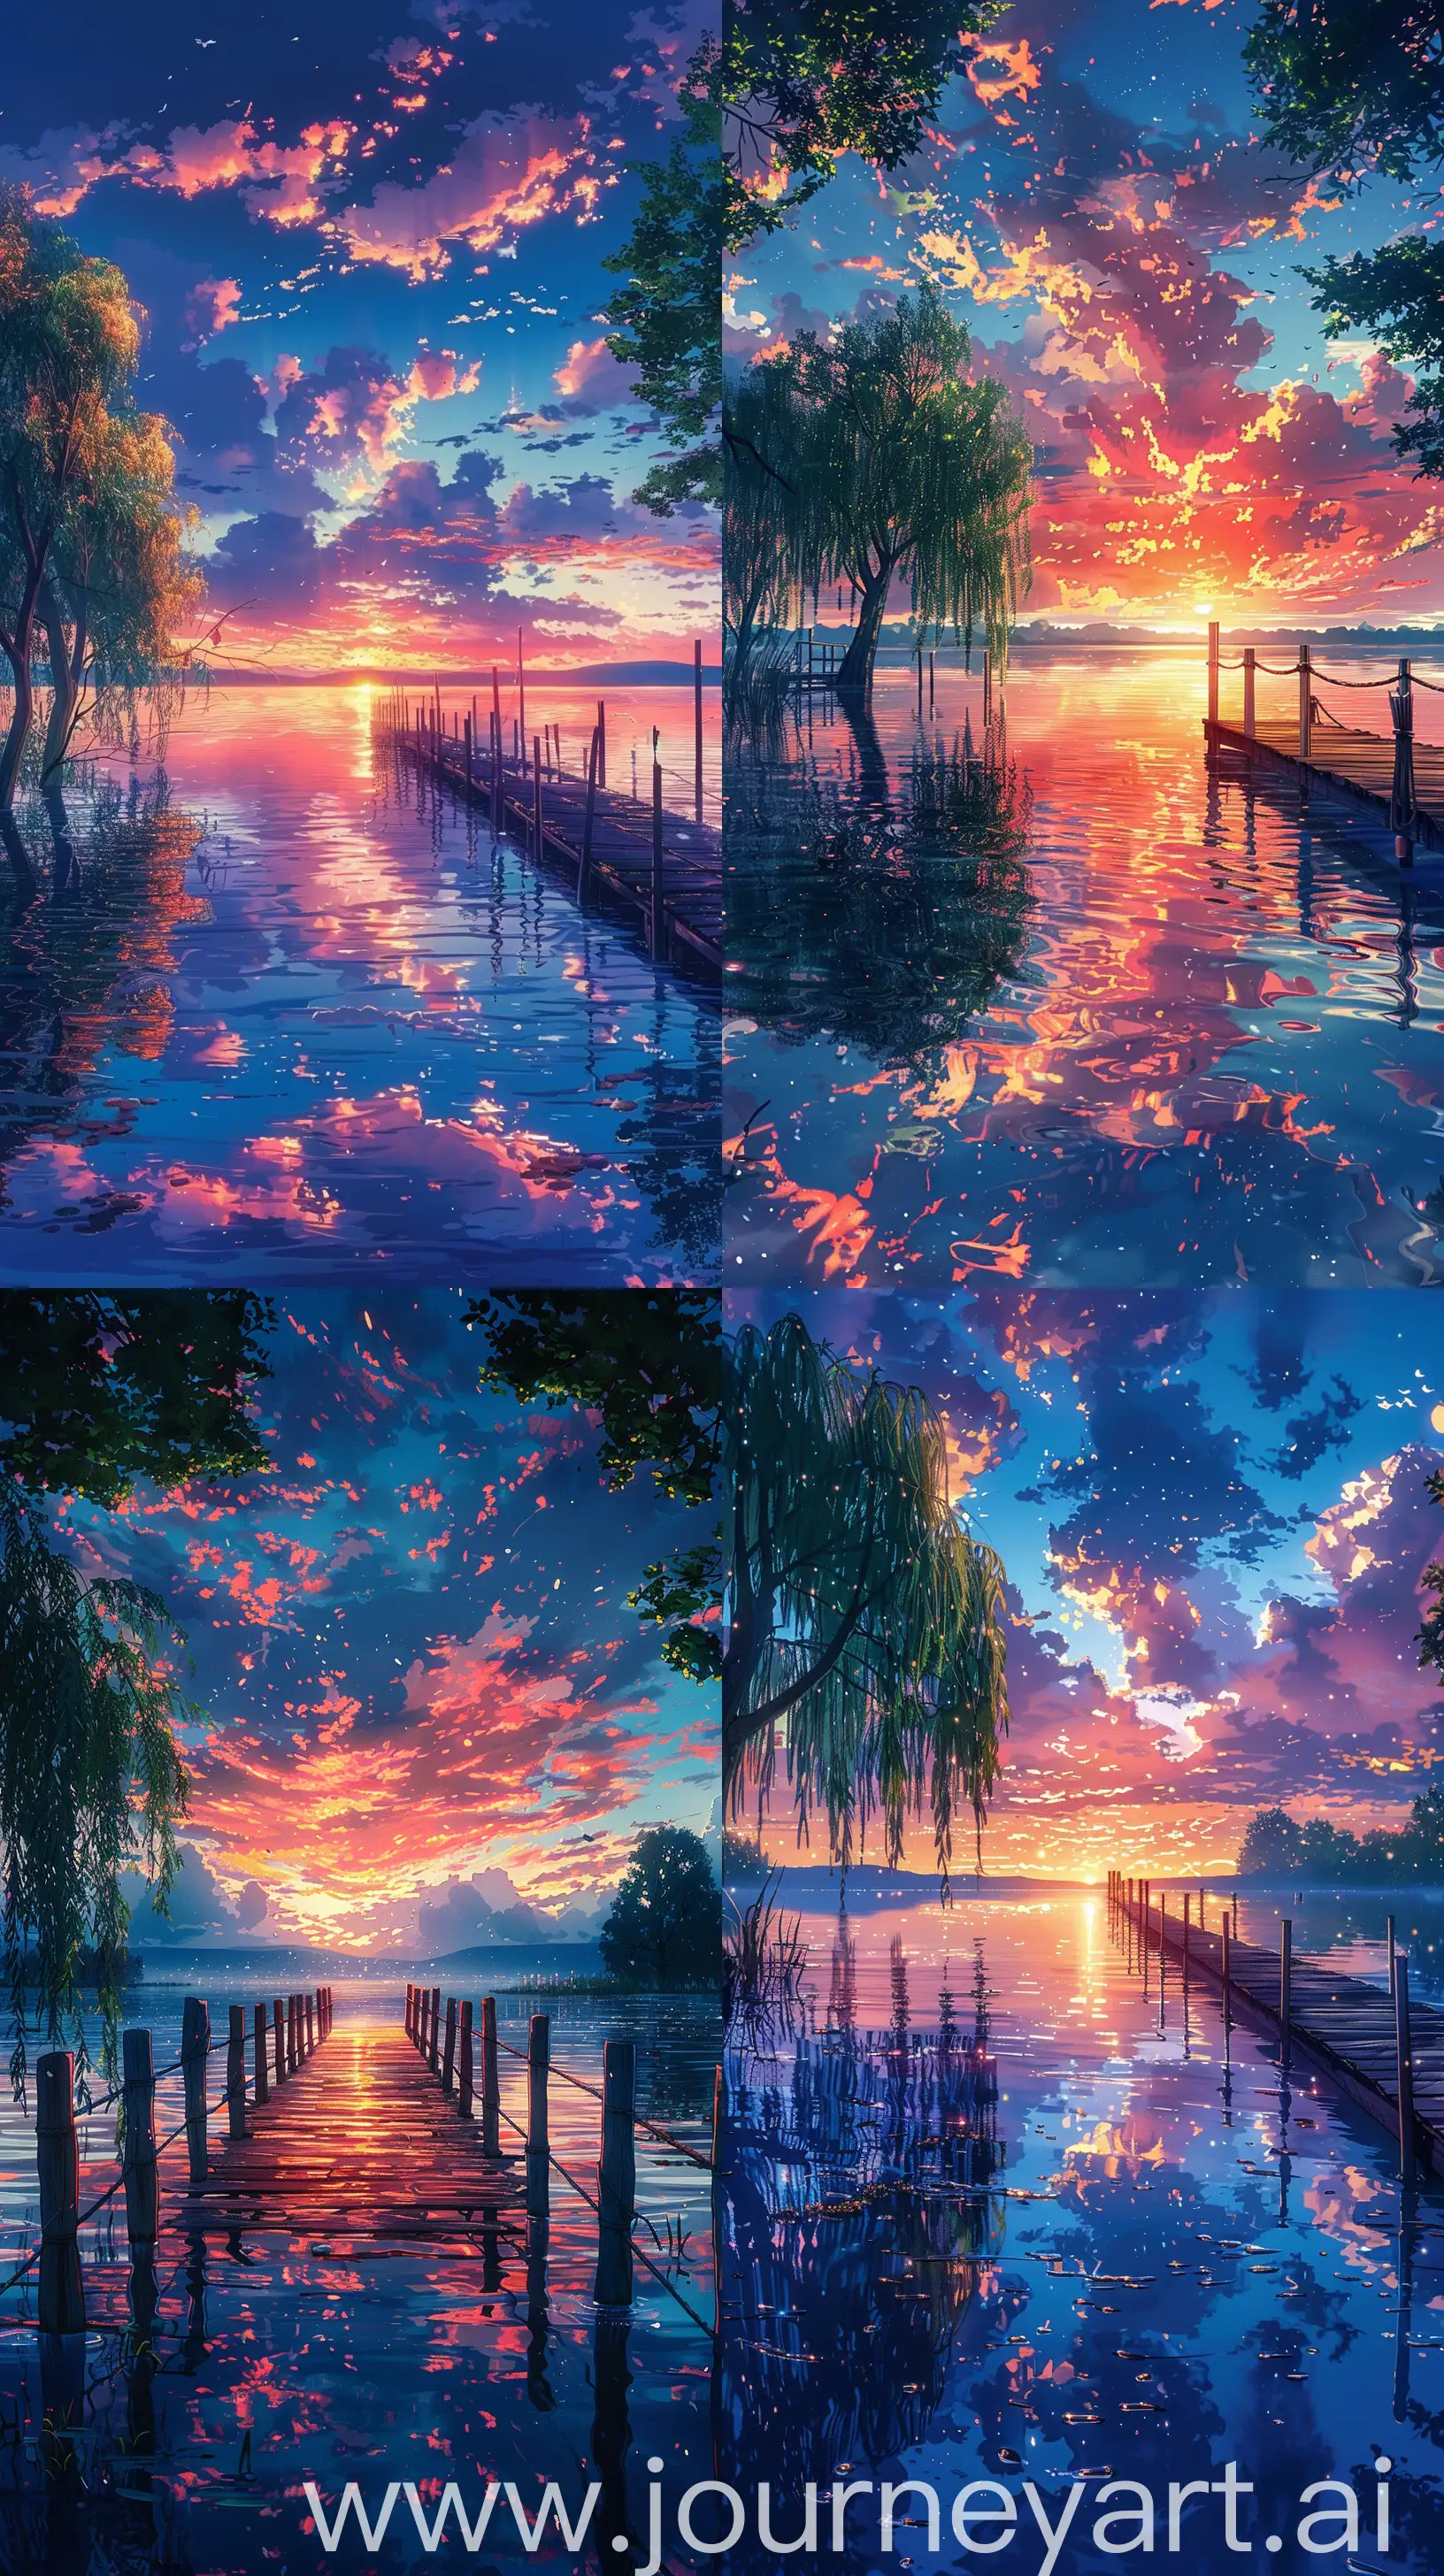 Tranquil-Morning-Reflections-Hvz-Lake-in-Makoto-Shinkai-Style